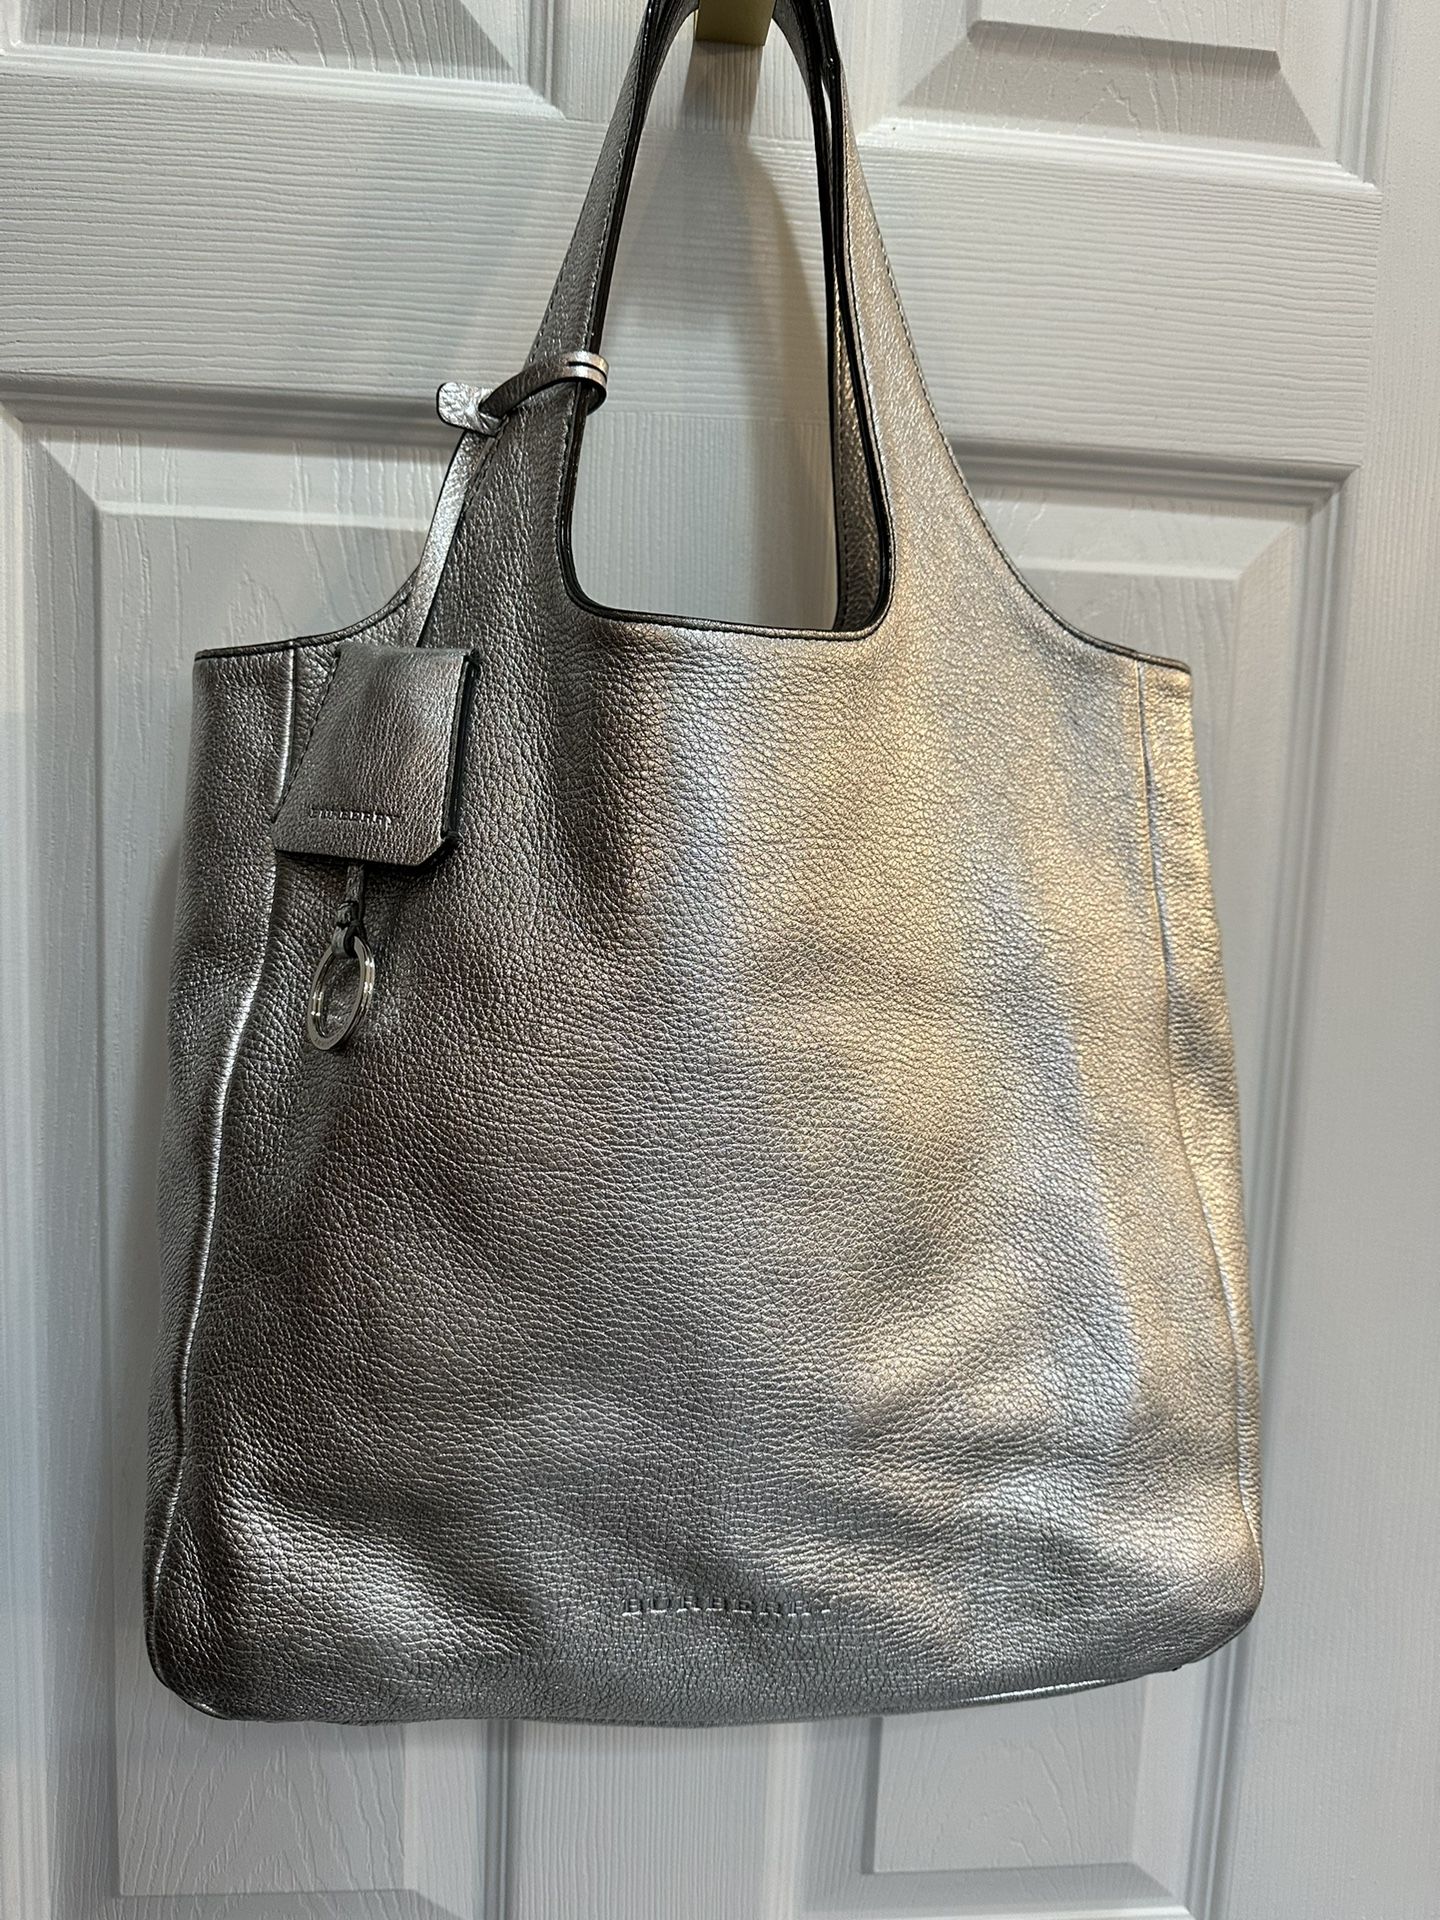 Authentic Silver metallic Burberry hobo / shoulder handbag.